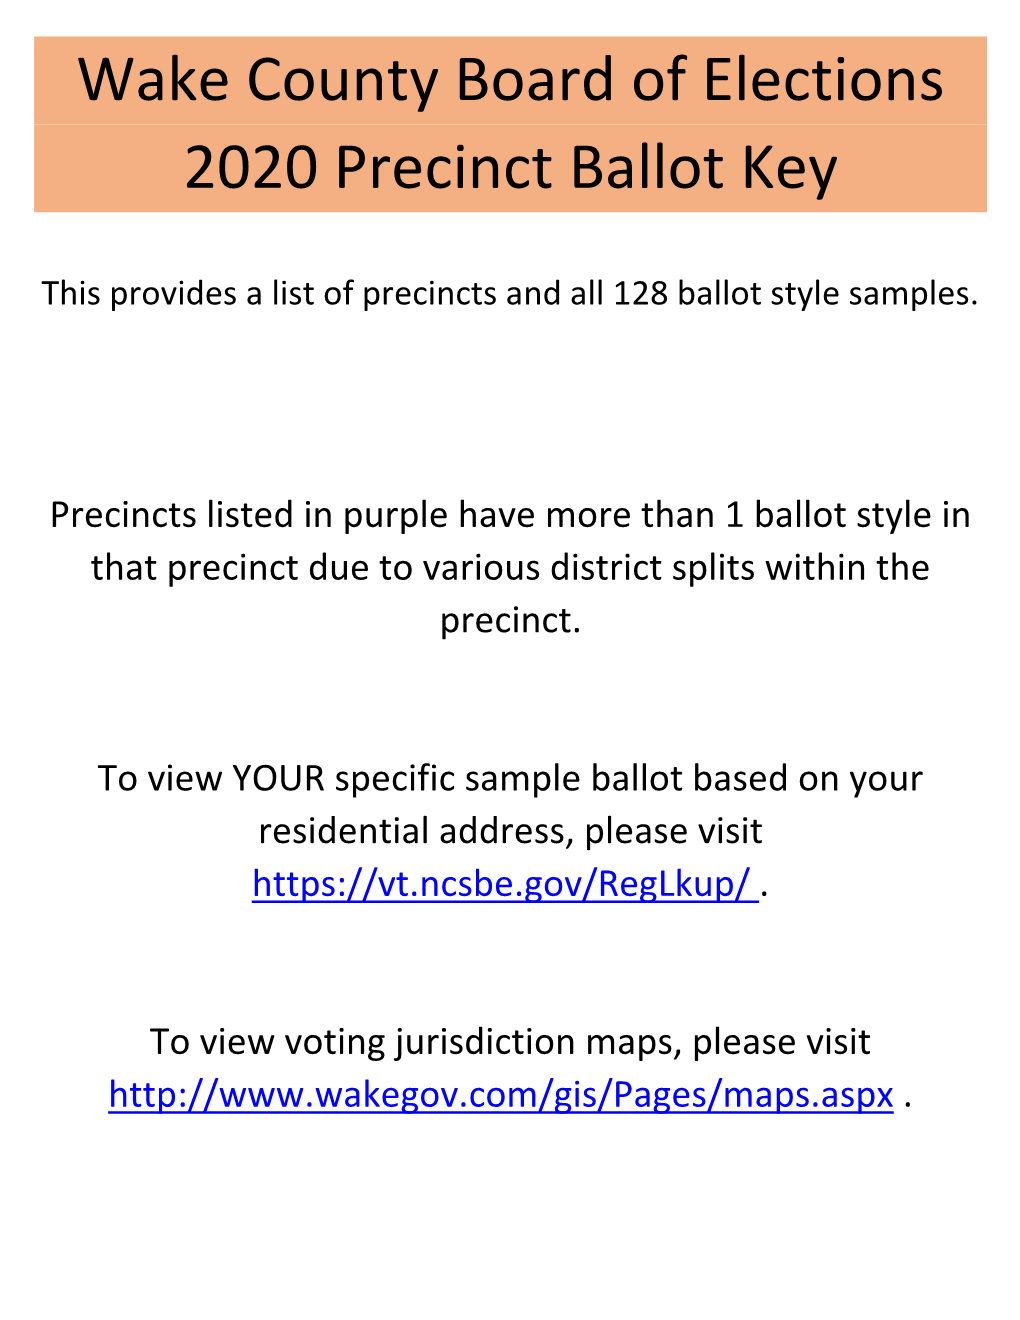 Wake County Board of Elections 2020 Precinct Ballot Key